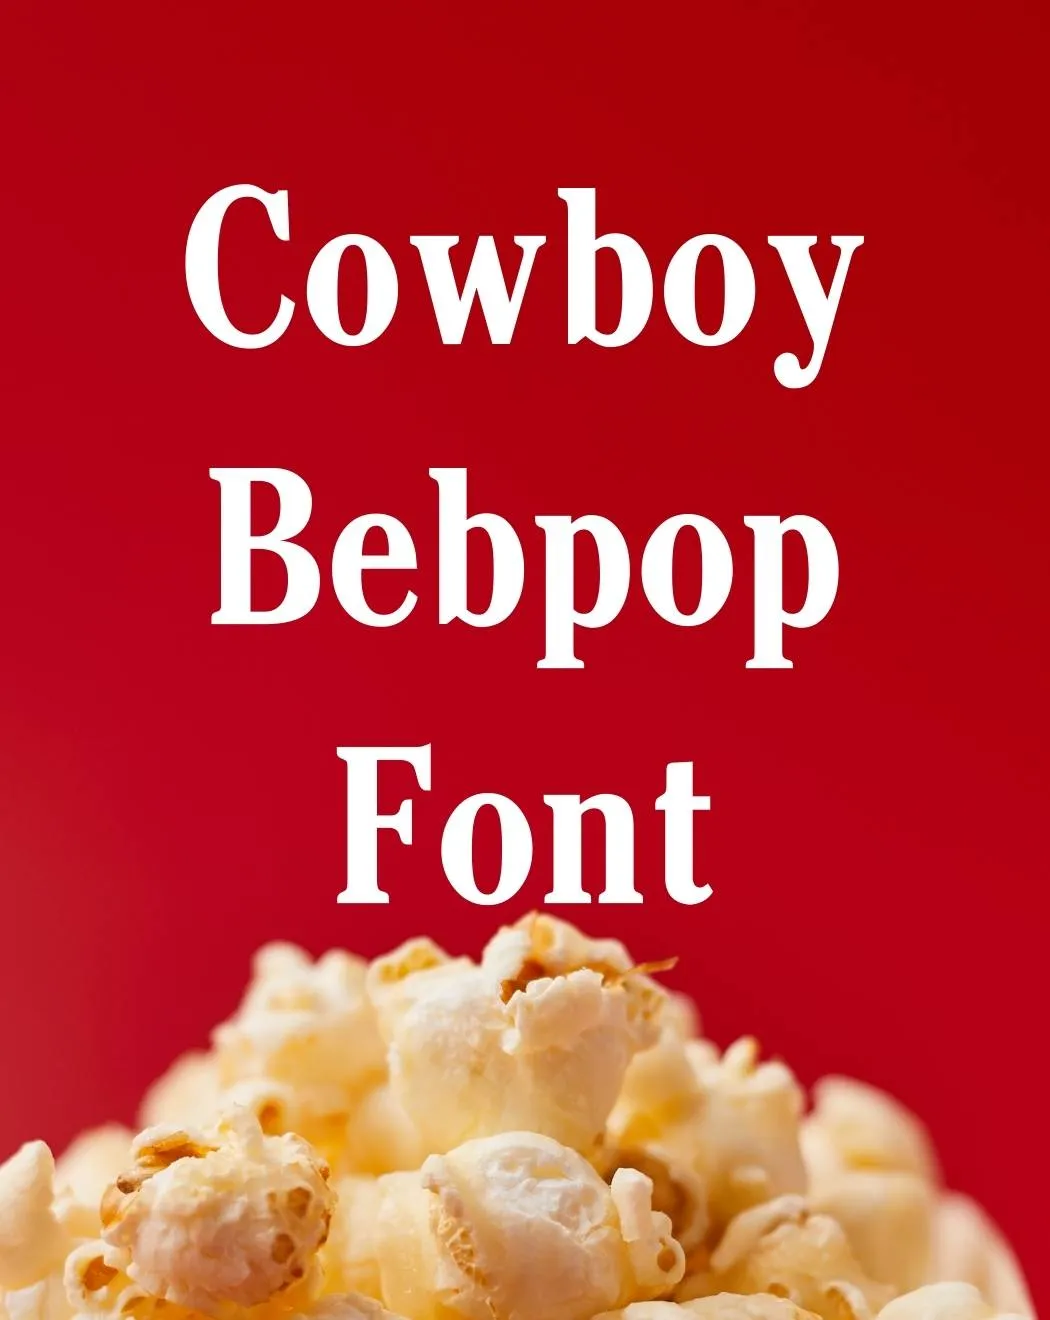 Cowboy Bebop Font Free Download